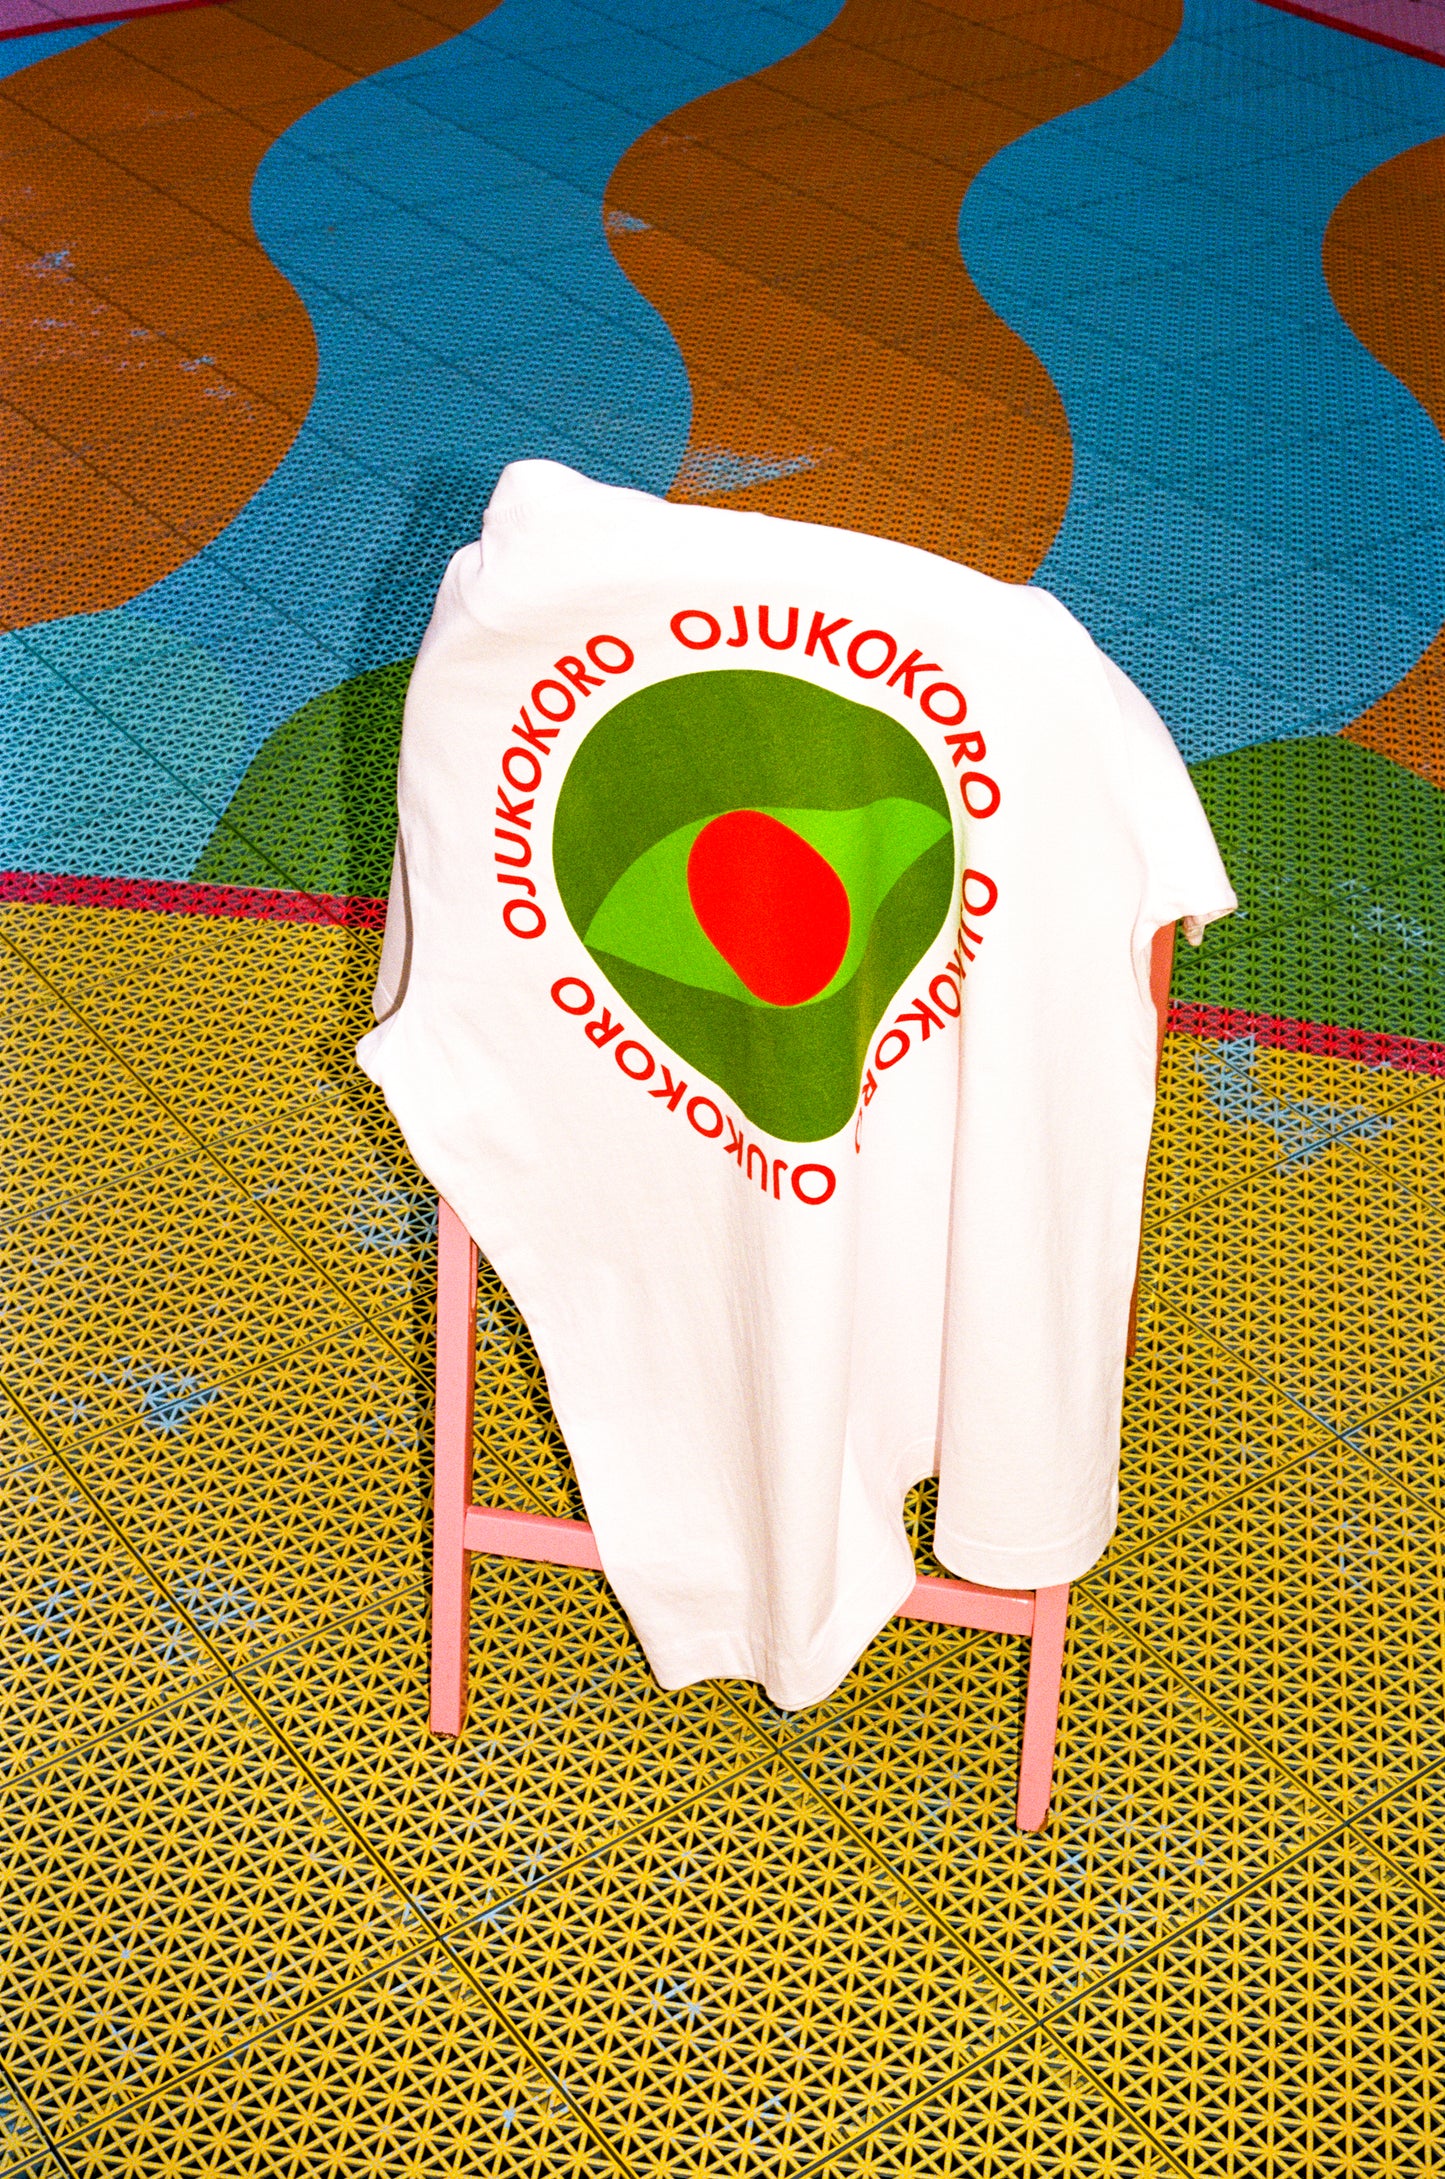 OJUKOKORO T-Shirt